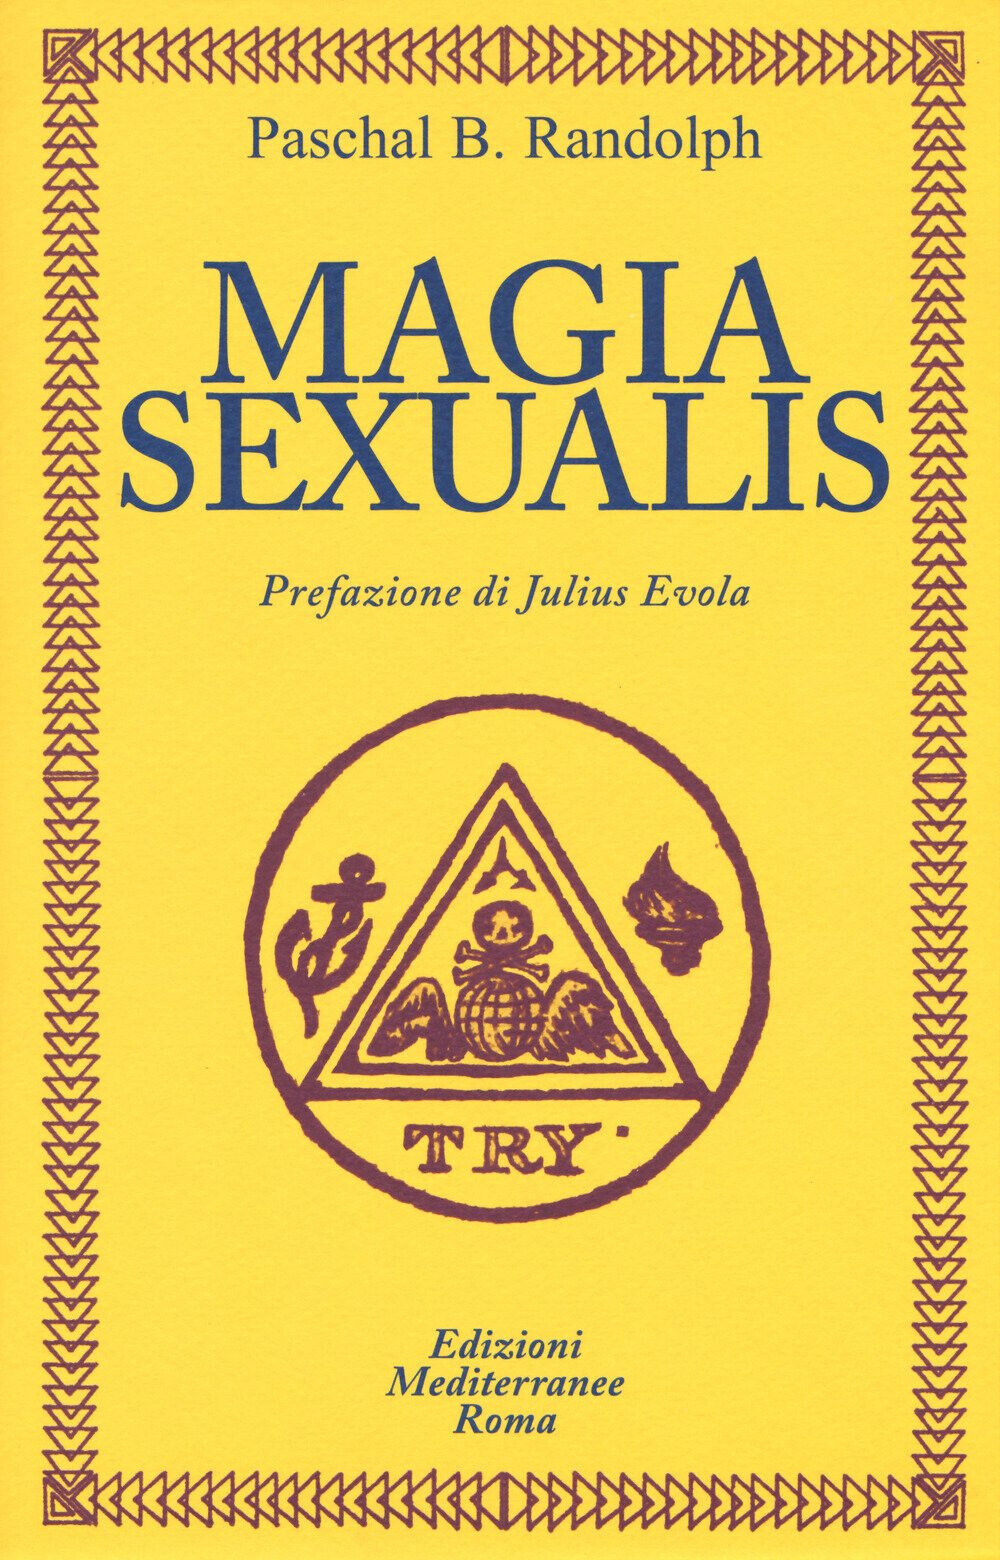 Magia sexualis - Paschal Beverly Randolph - Edizioni Mediterranee, 2017